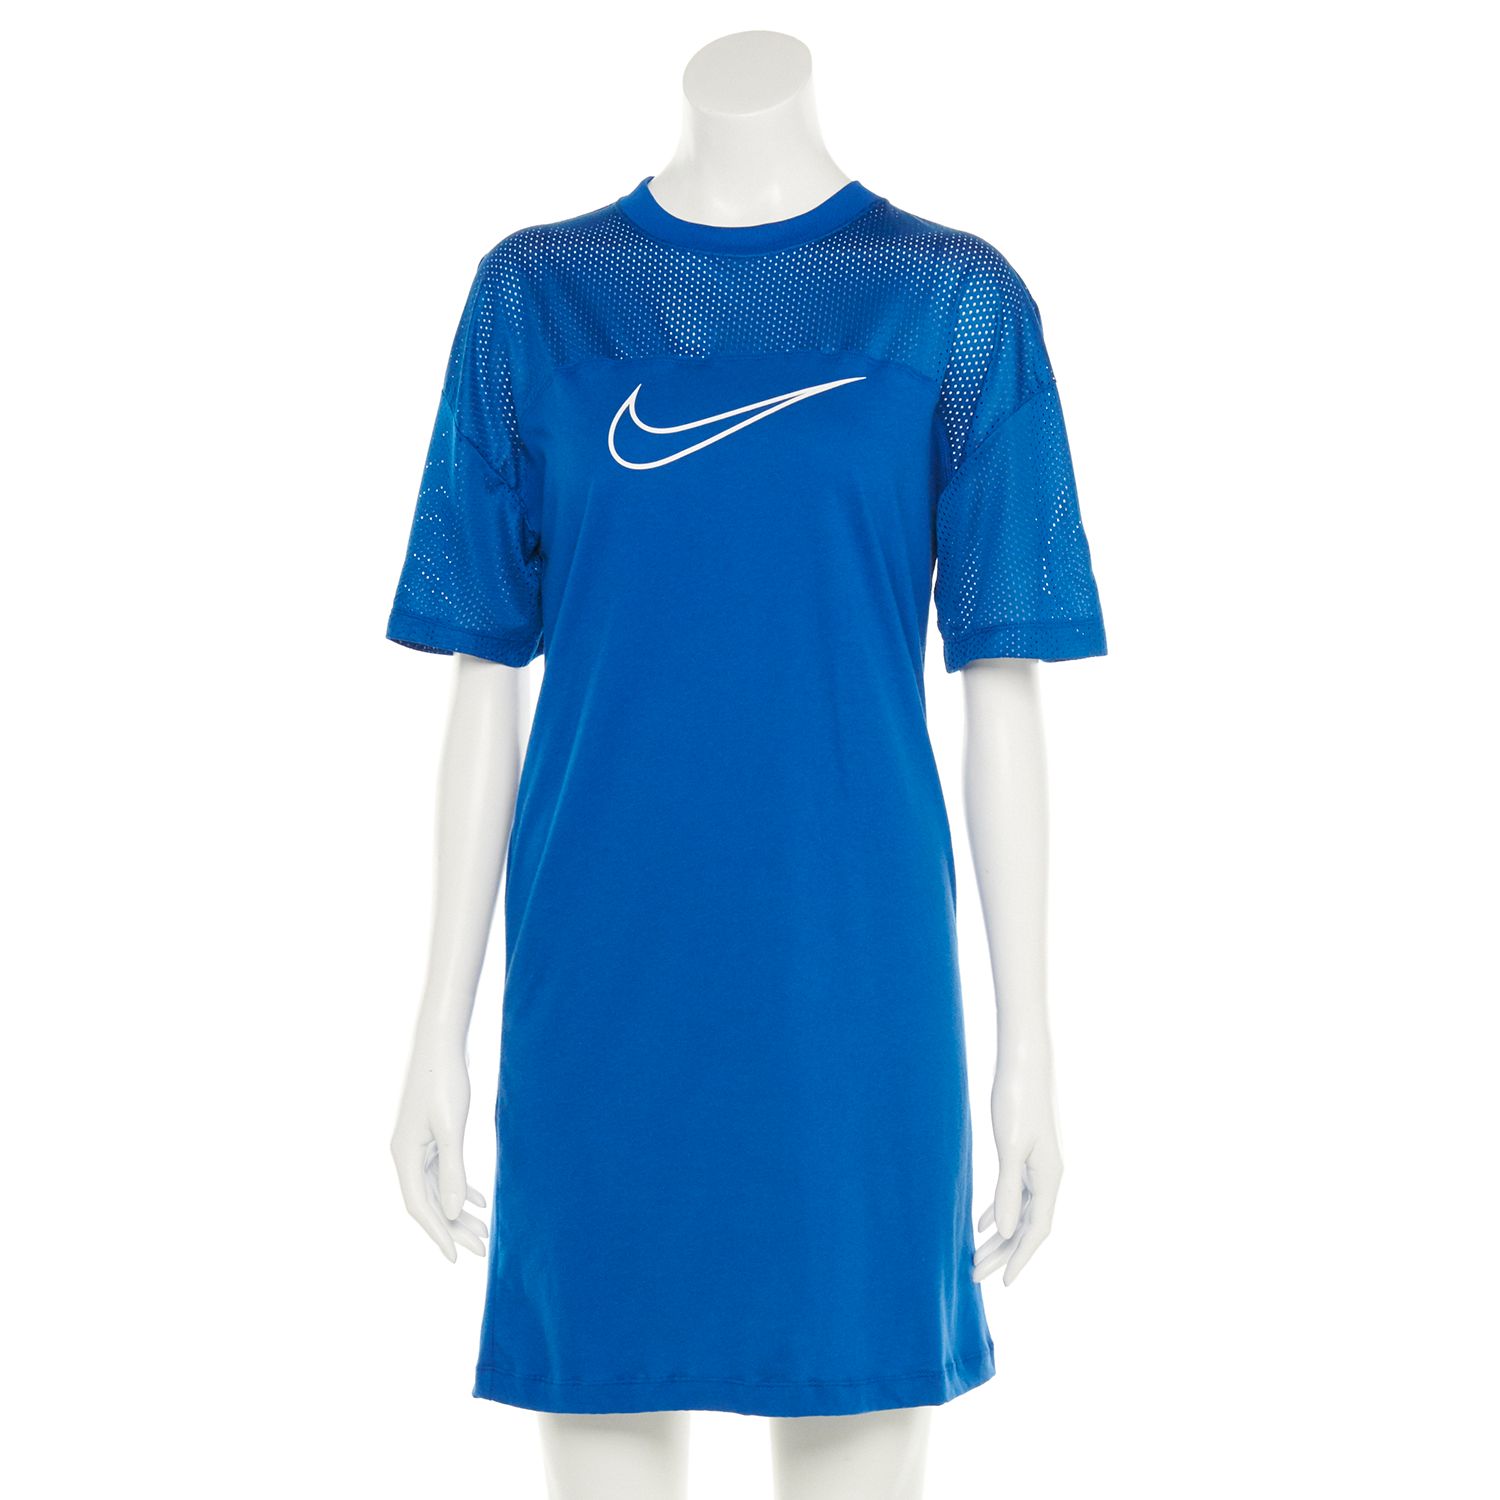 Women's Nike Sportswear Mesh T-Shirt Dress